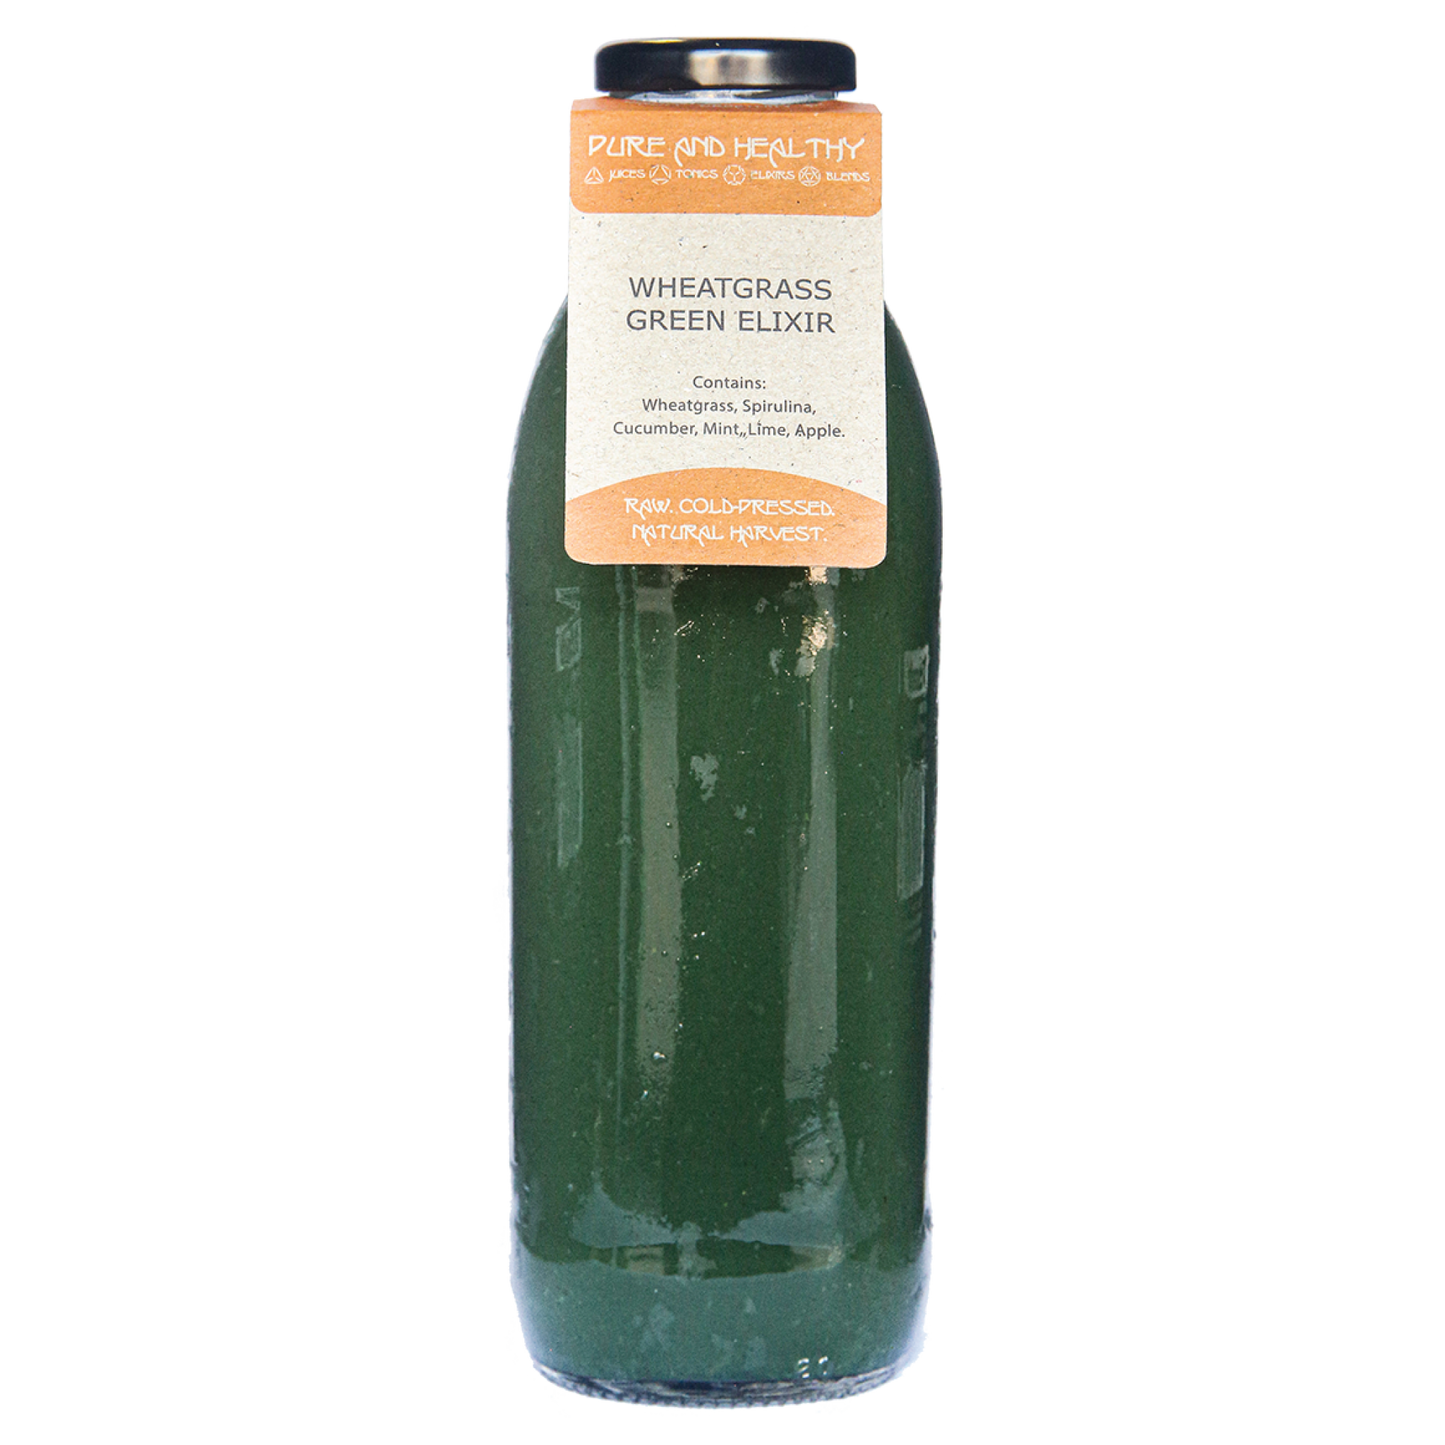 Wheatgrass Green Elixir